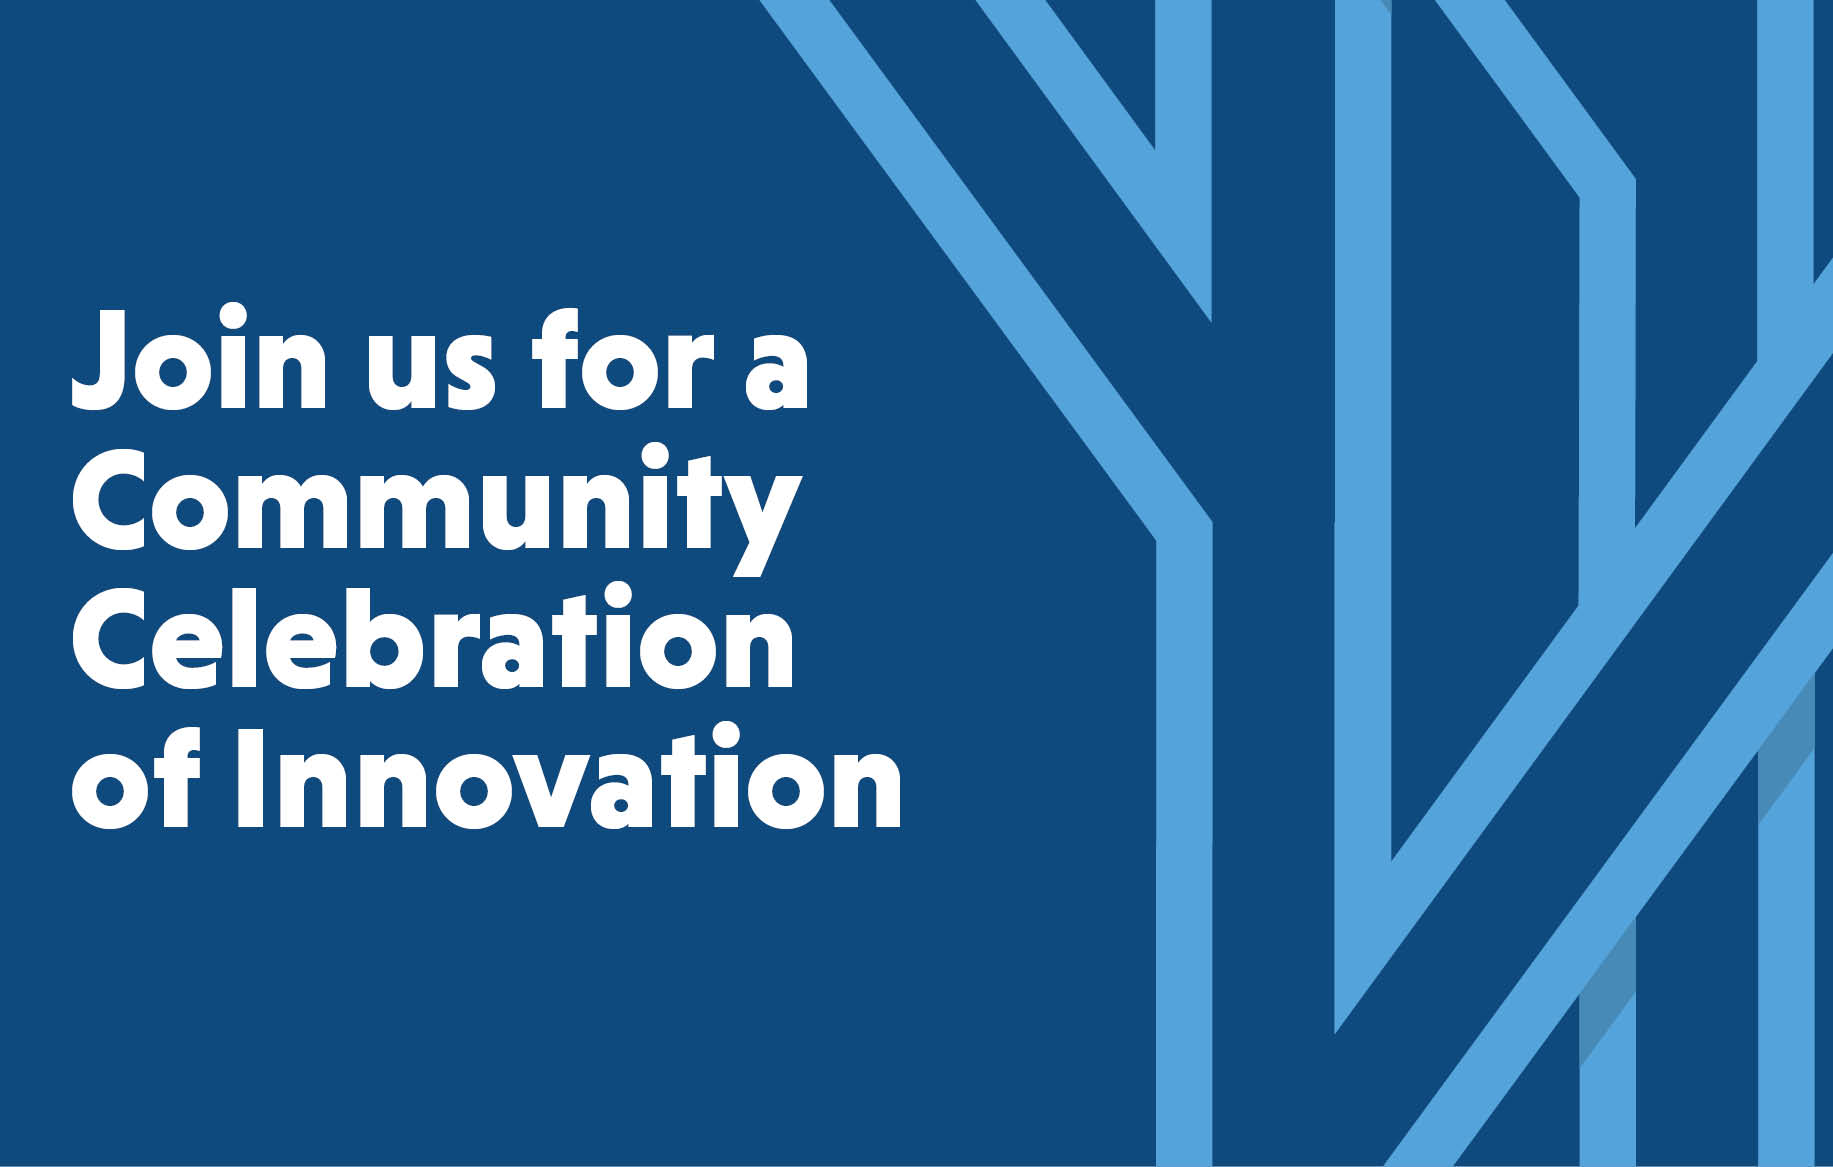 Join us for a community celebration of innovation